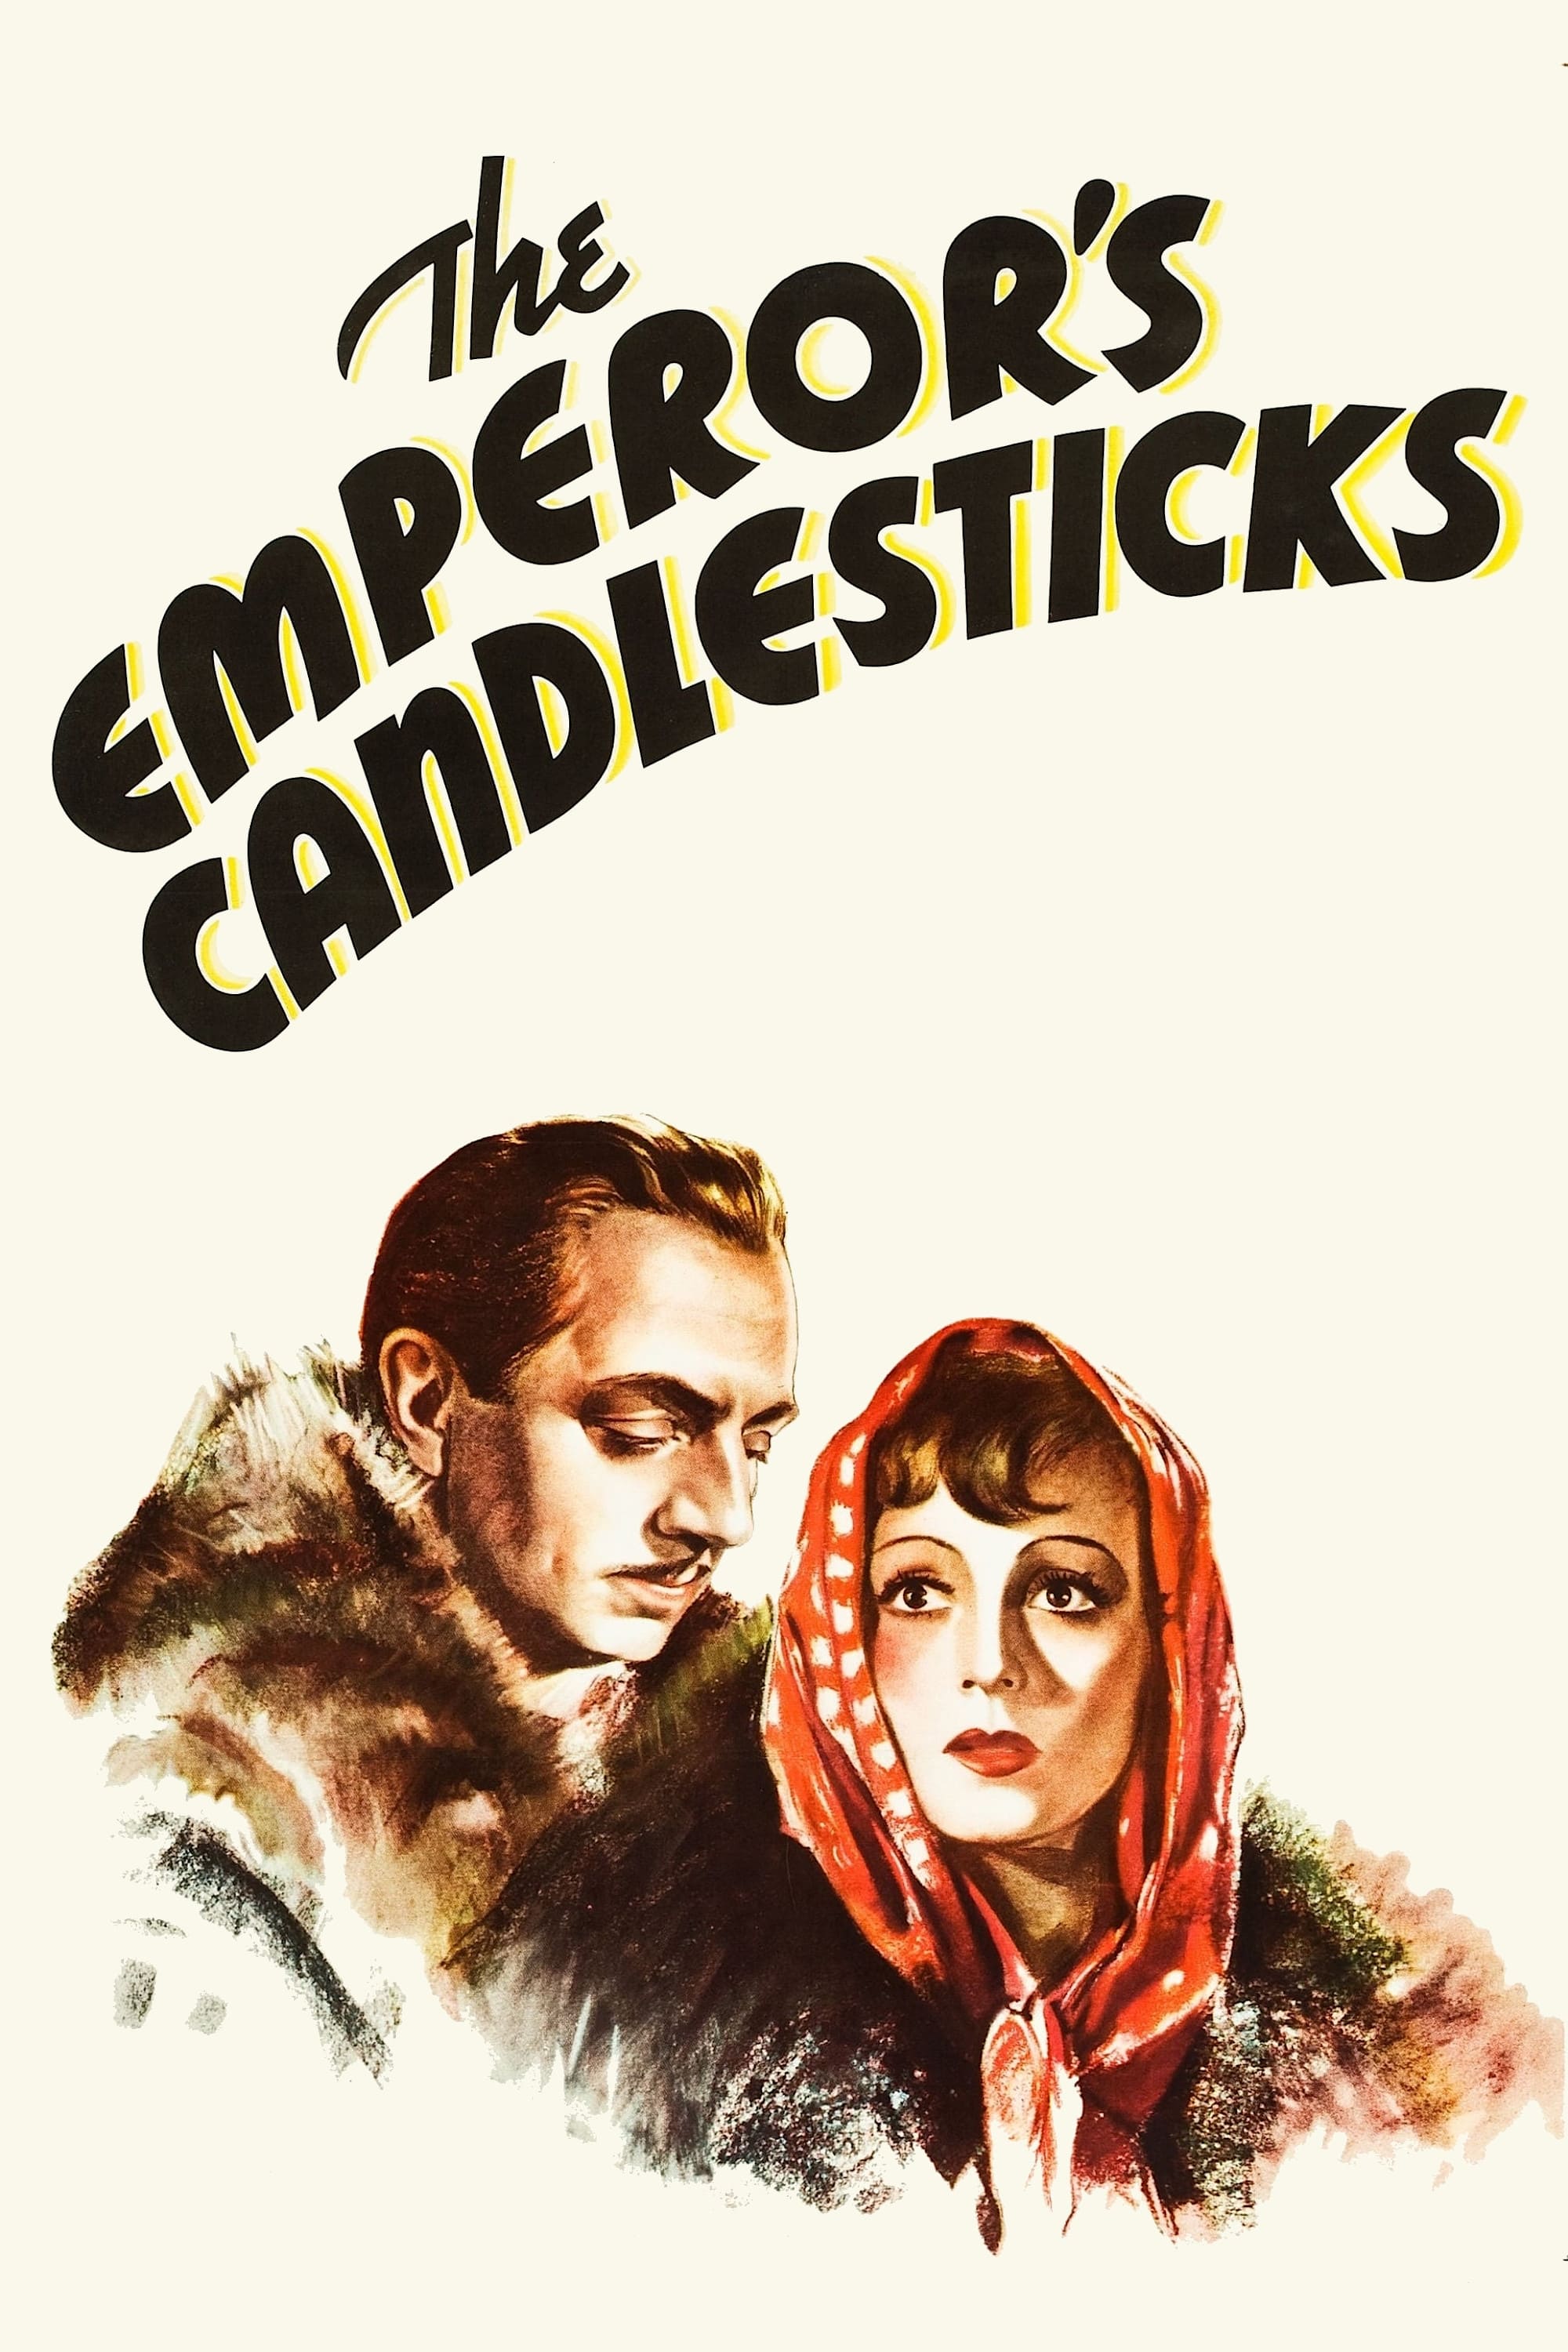 The Emperor's Candlesticks